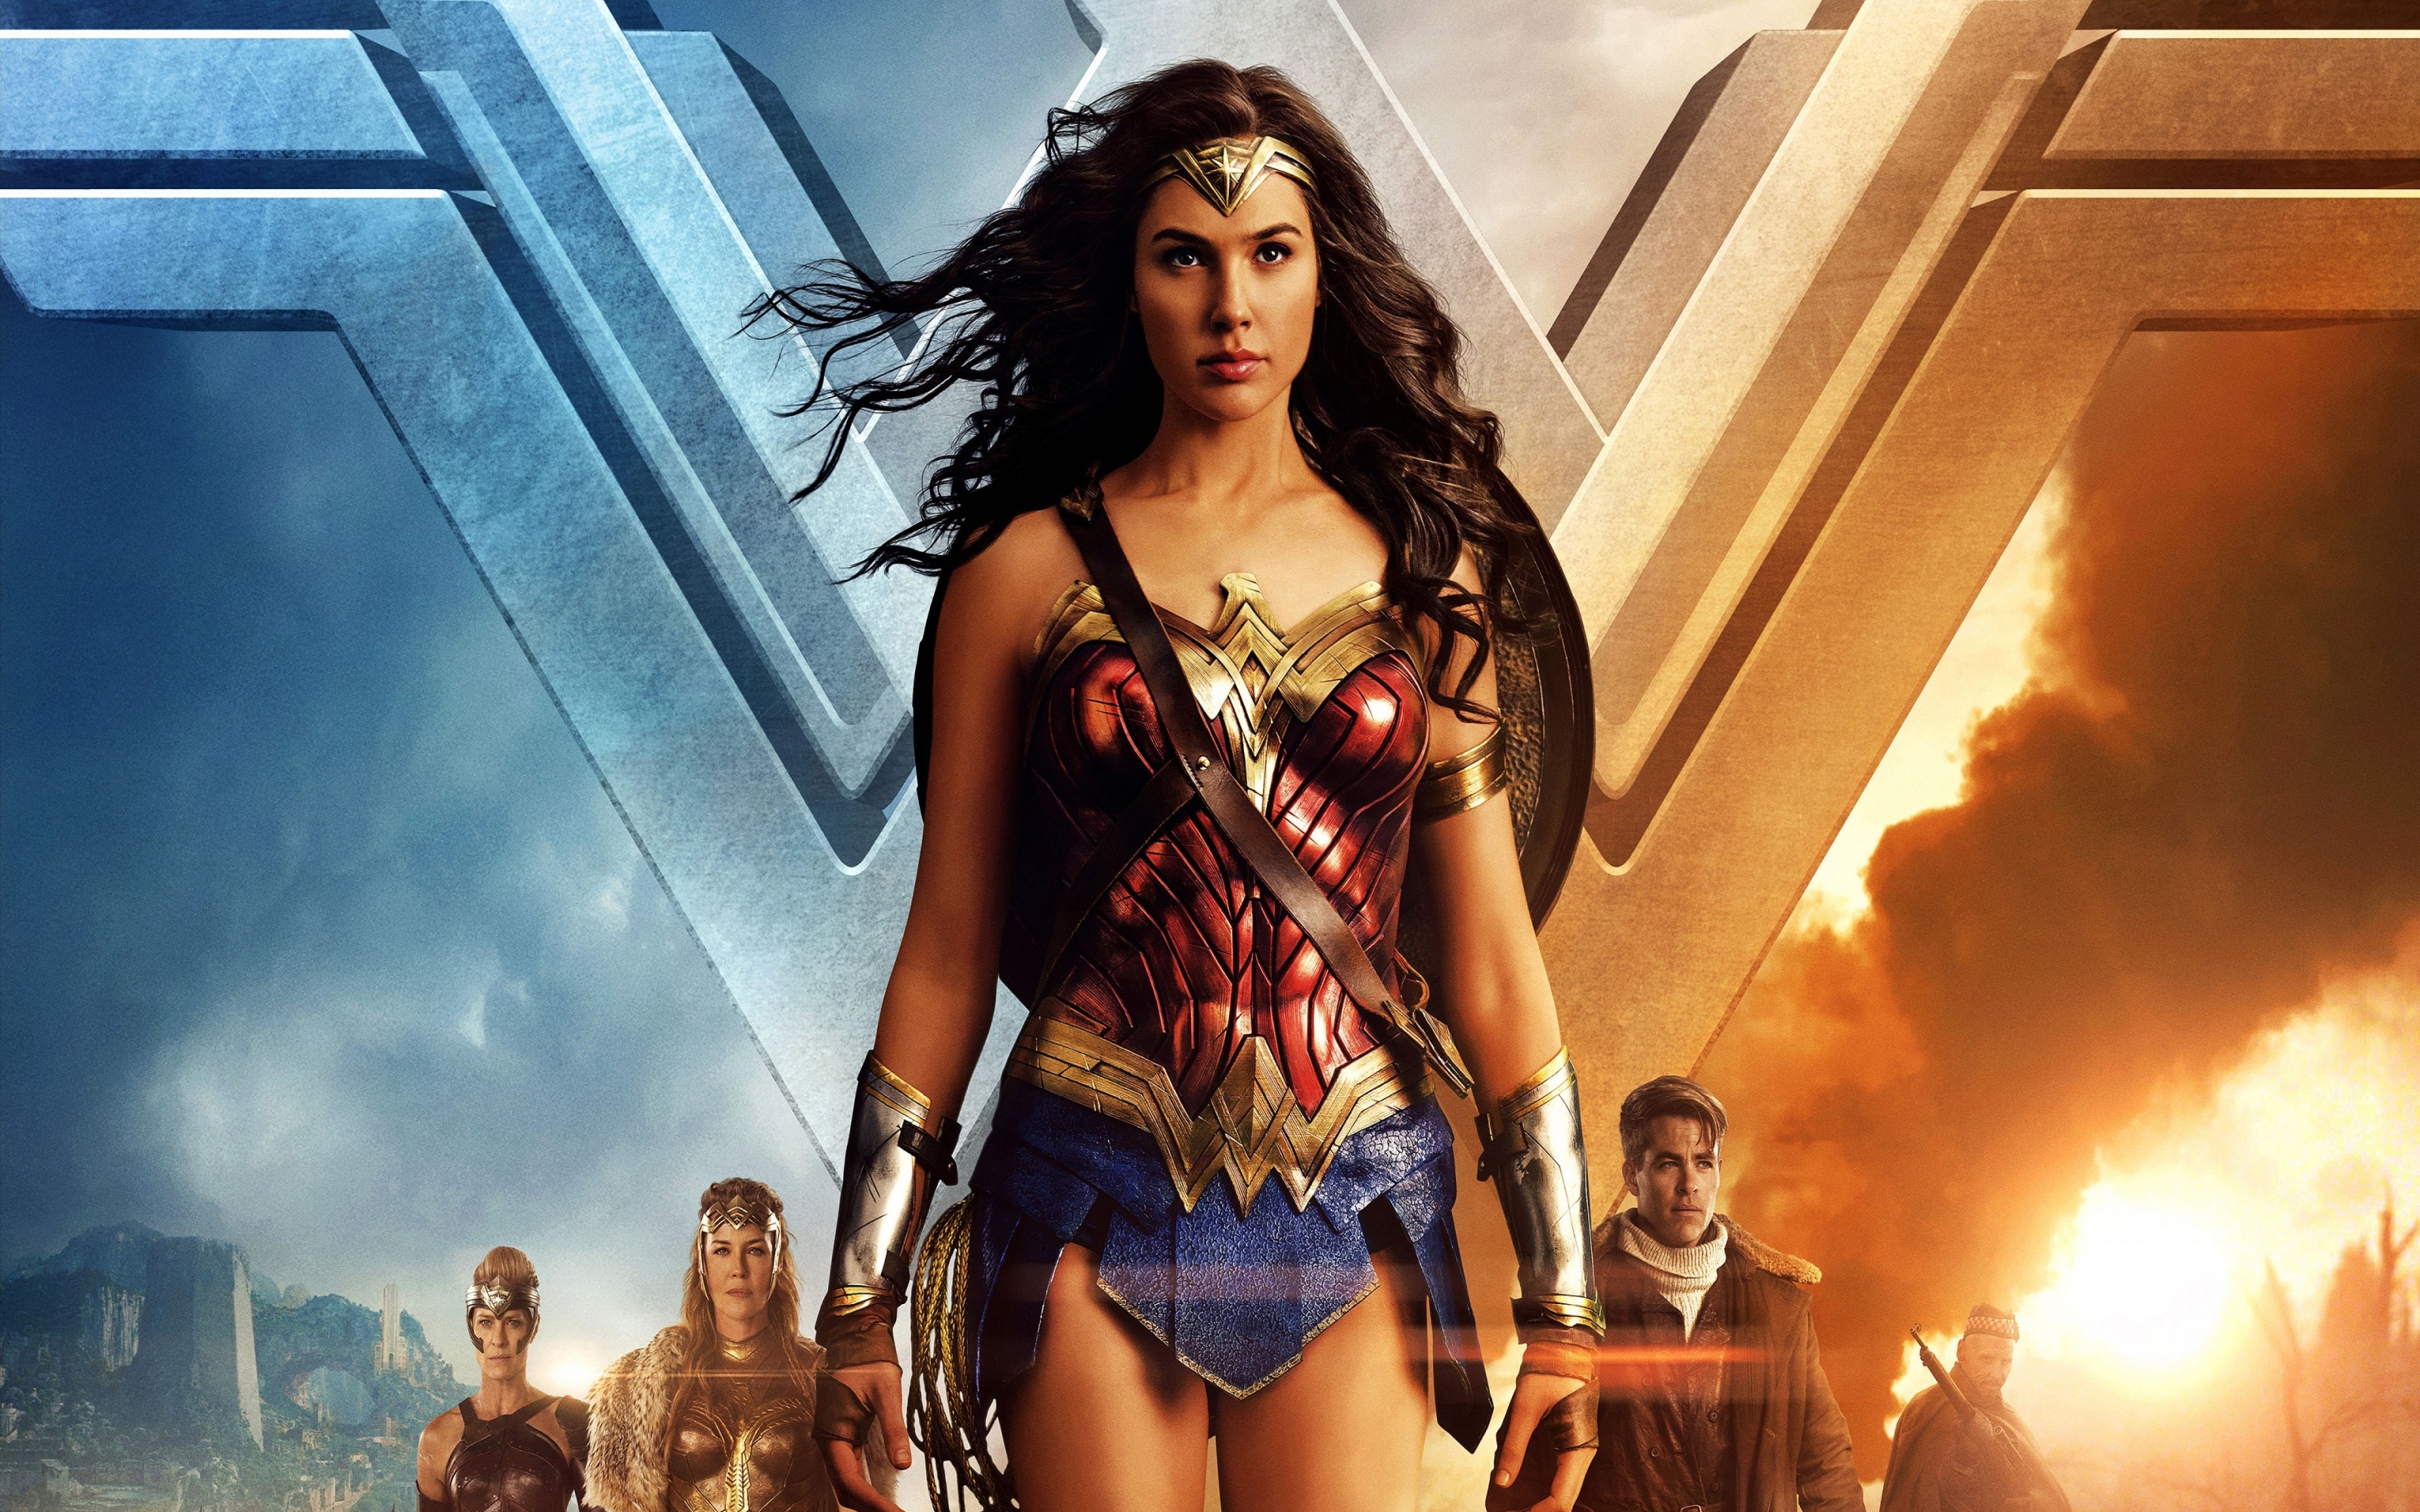 Wonder Woman Gal Gadot 2017 for 3200 x 2000 Wide Retina Display resolution